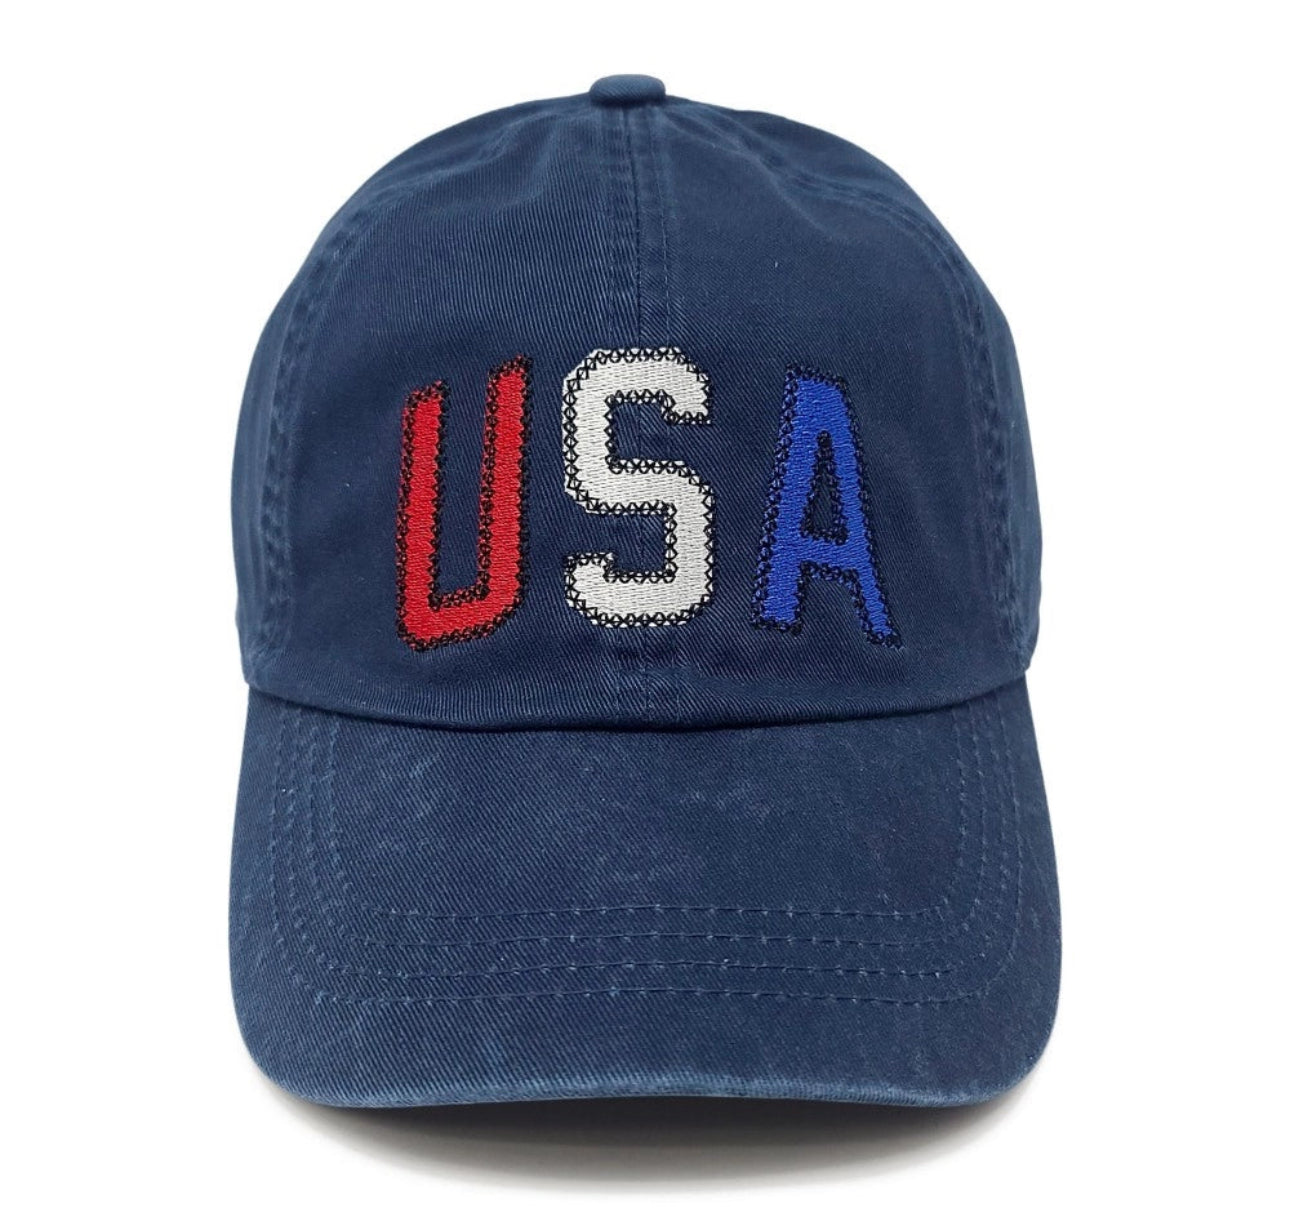 USA' Embroidered Baseball Cap l